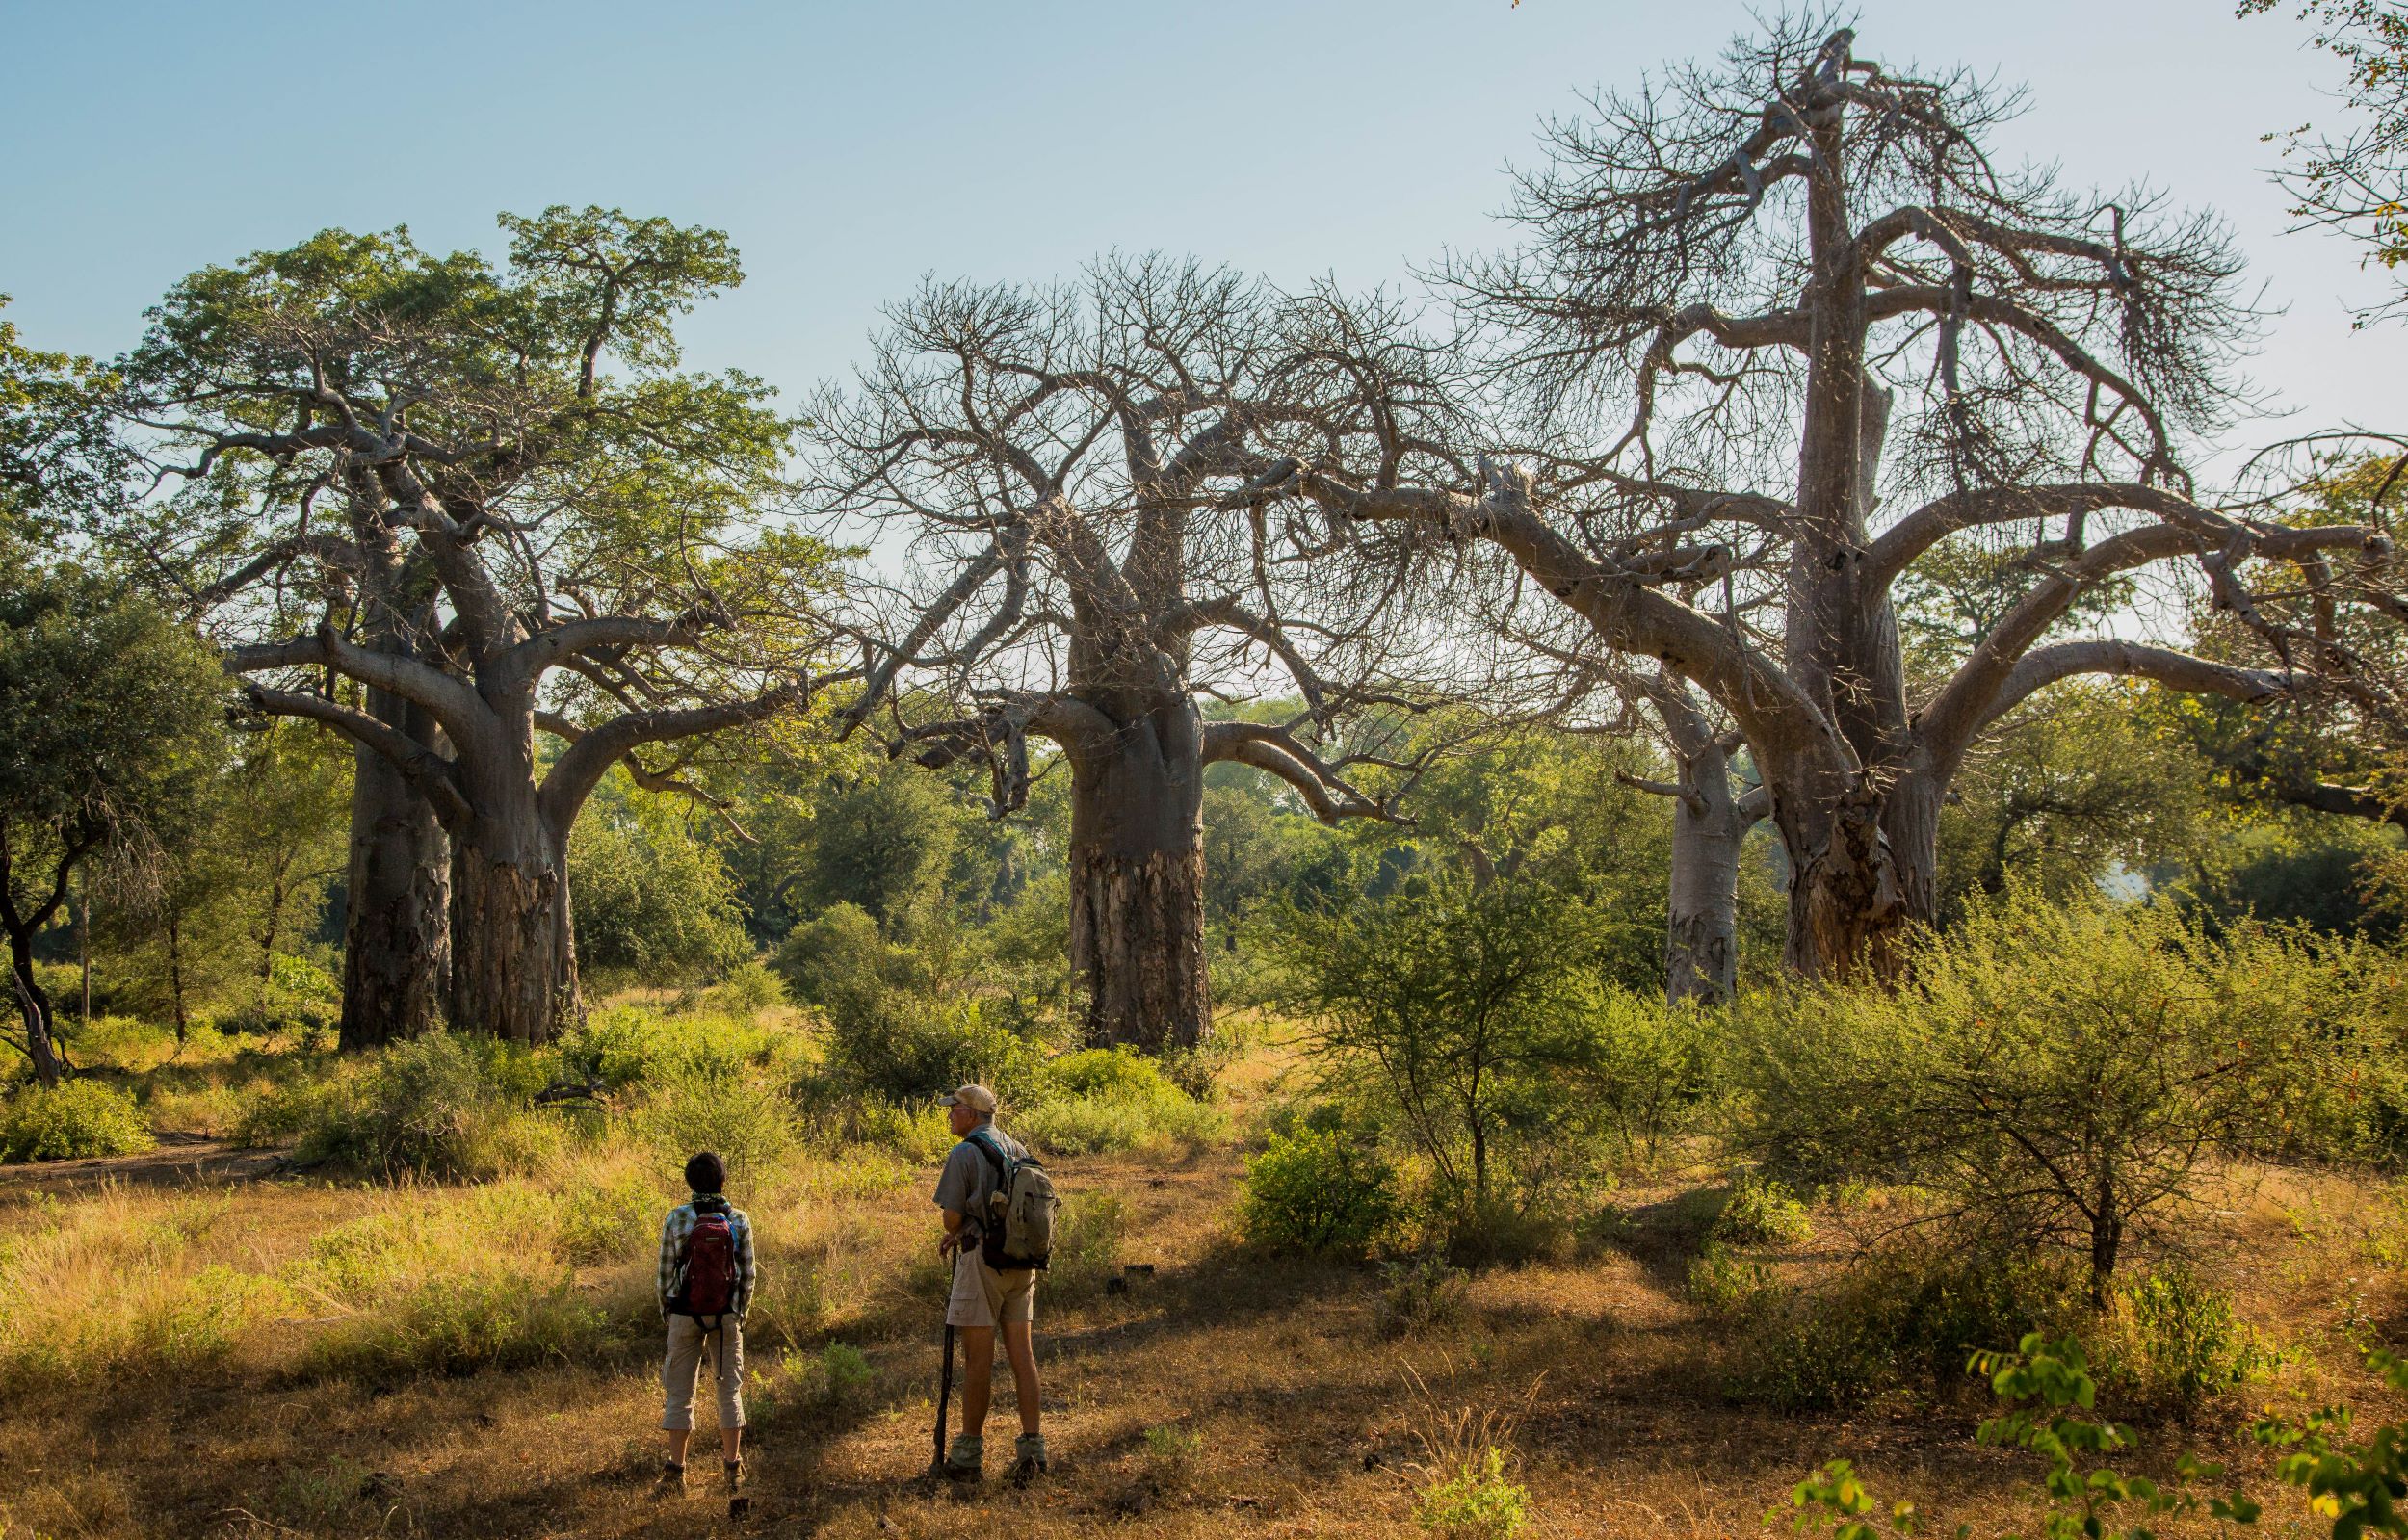 Baobab-Forest-2 Webinar promo image.jpg